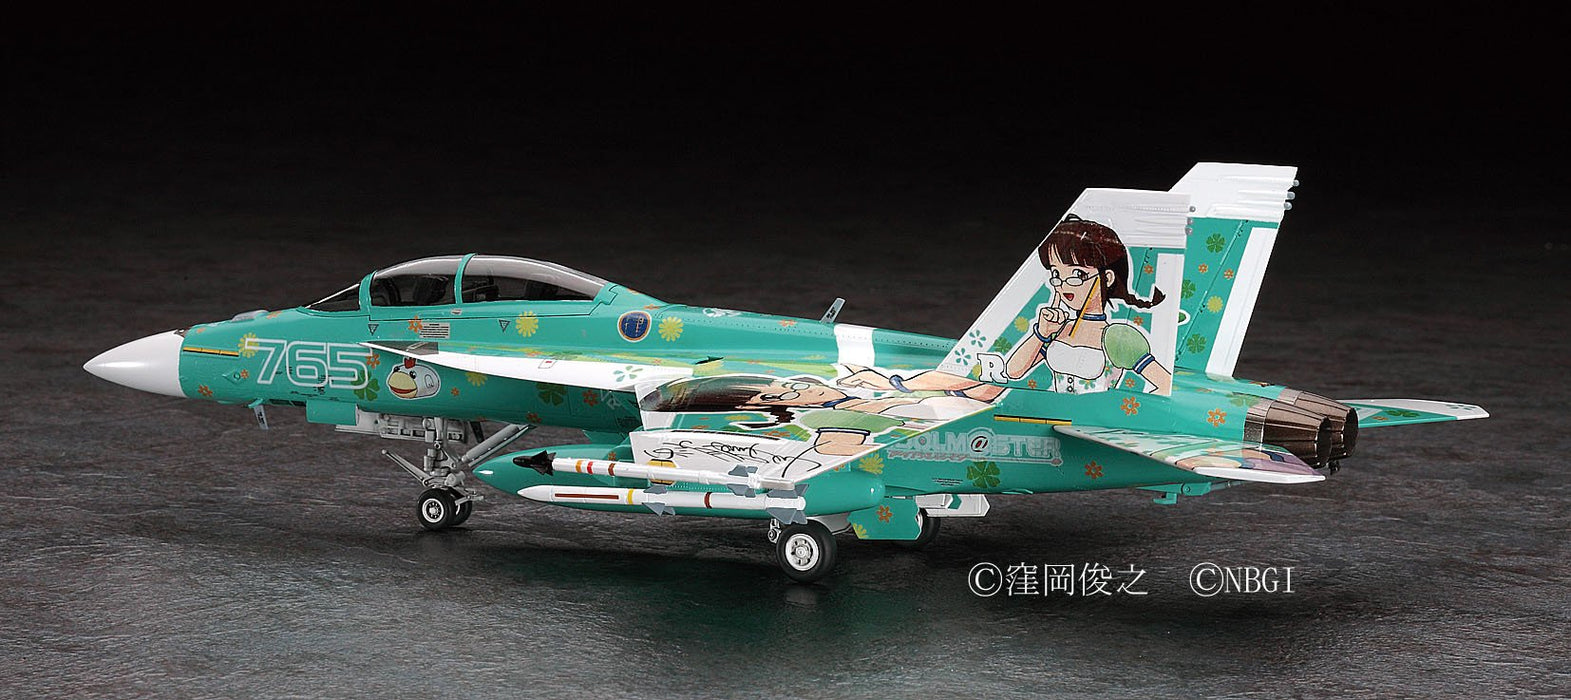 HASEGAWA Sp293 The Idol Master F/A-18F Super Hornet 1/72 Scale Kit